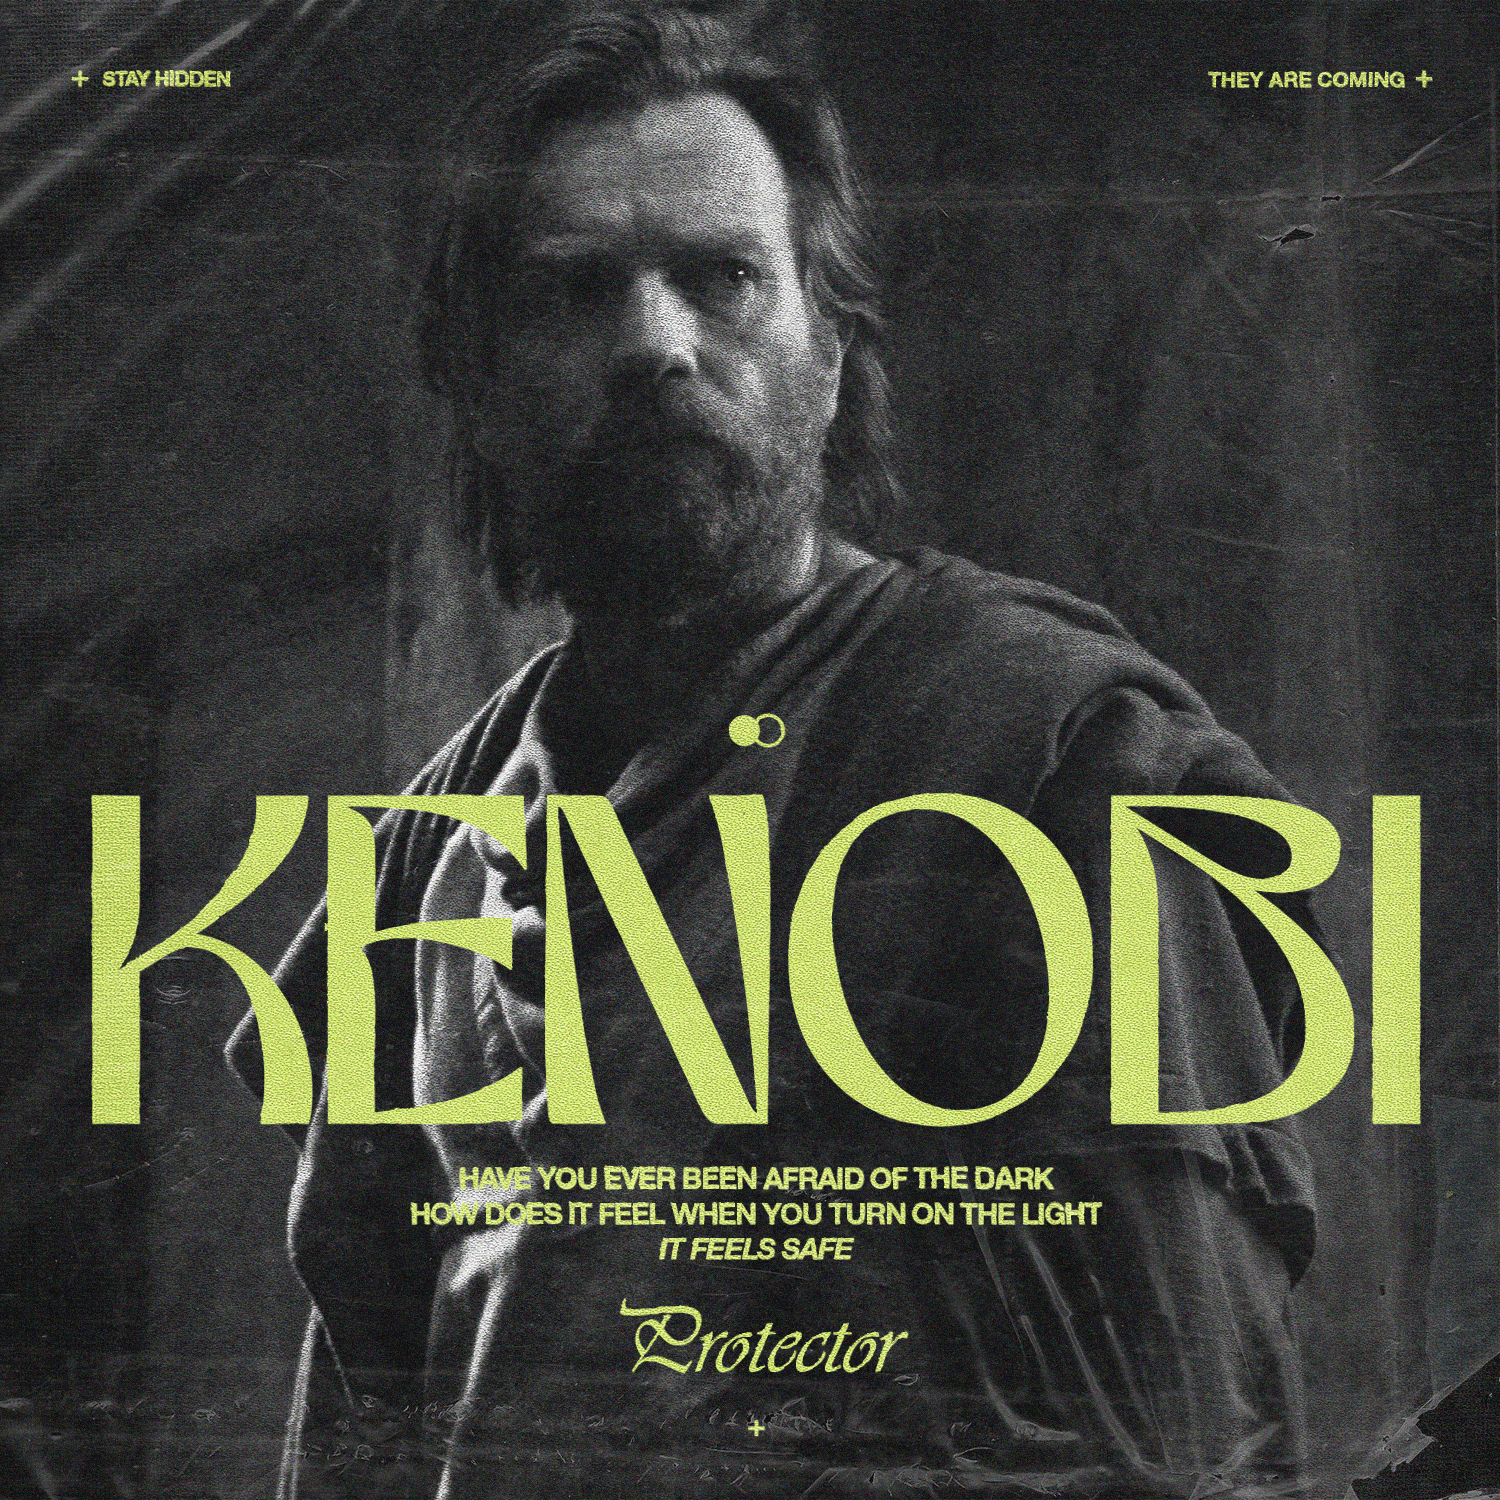 Kenobi-protector-insta-min